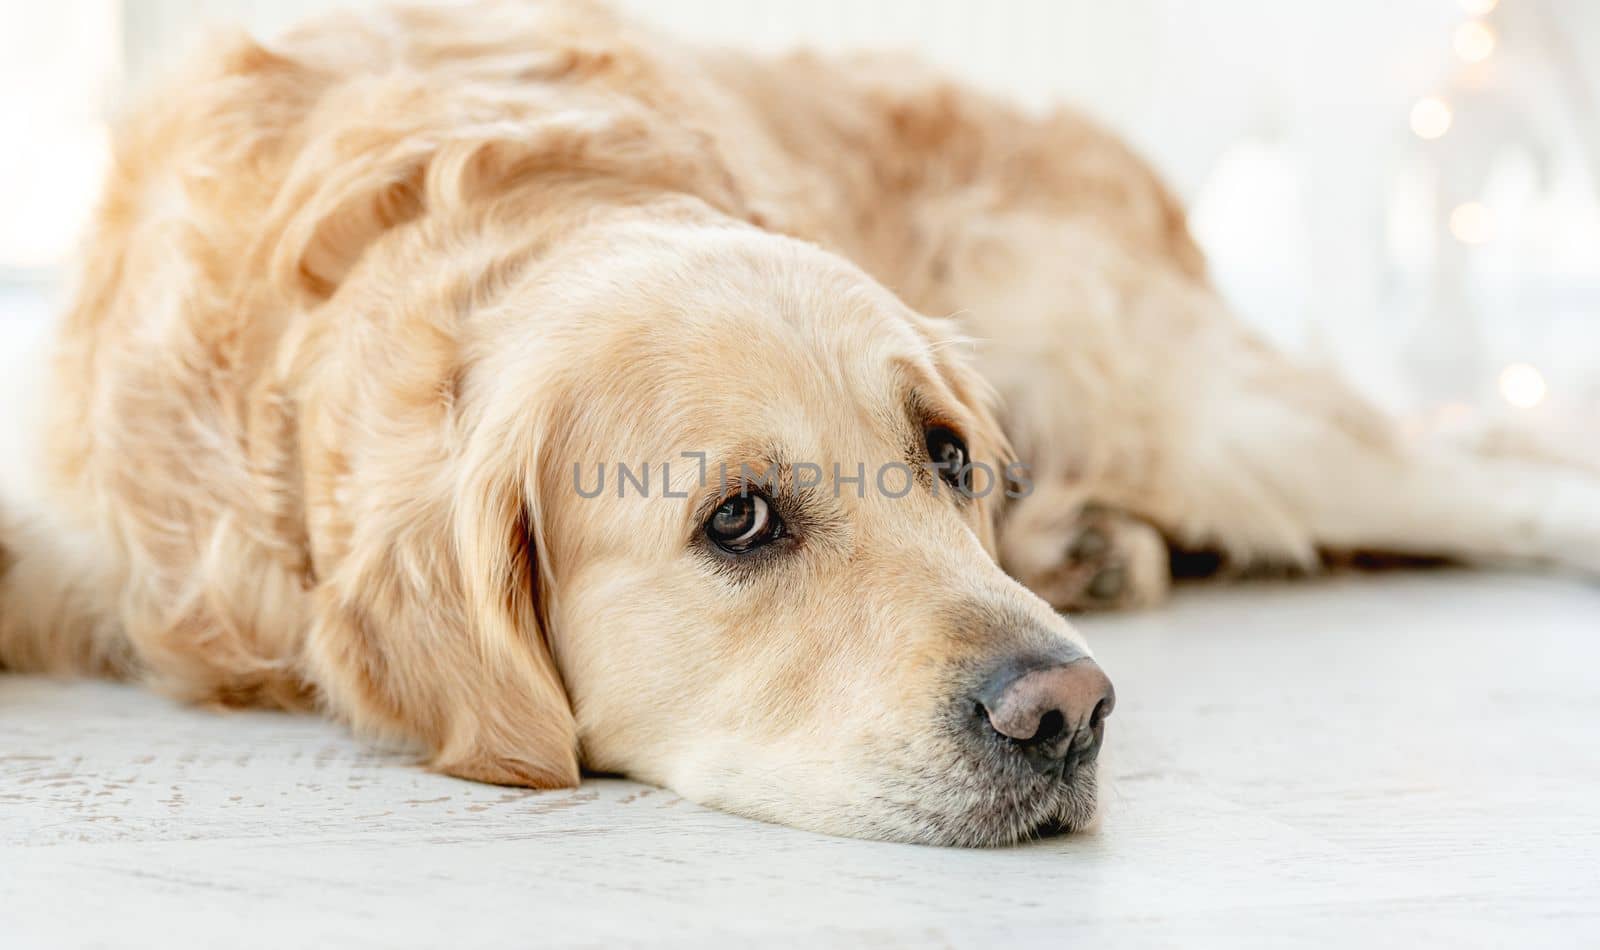 Golden retriever dog resting at home closeup portrait. Purebred doggy pet labrador lying on floor